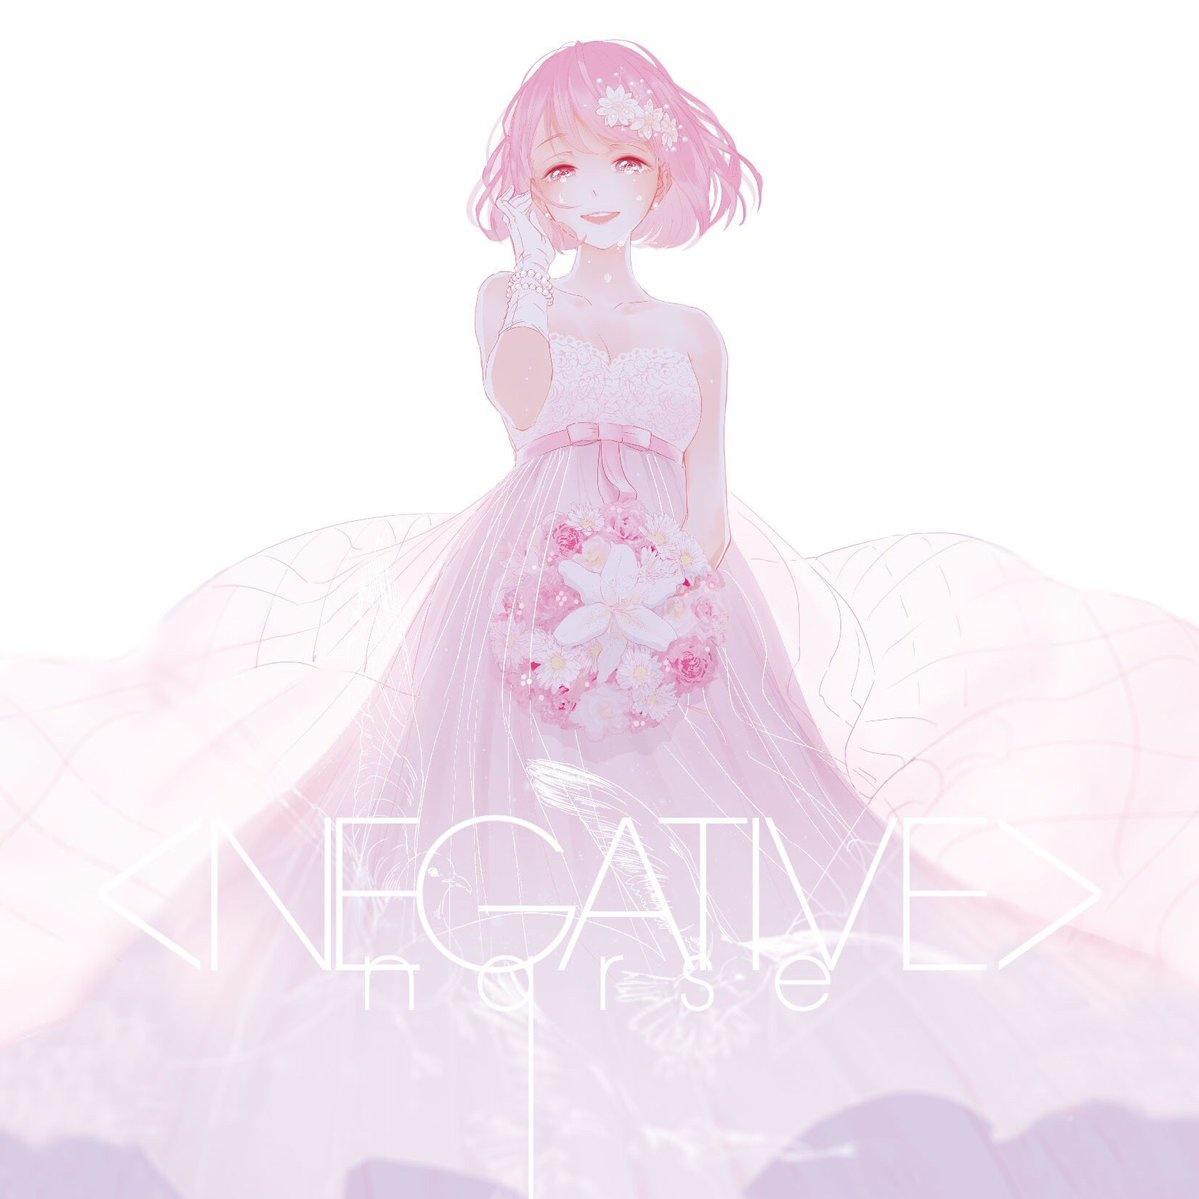 NEGATIVE - nqrse - 专辑- 网易云音乐